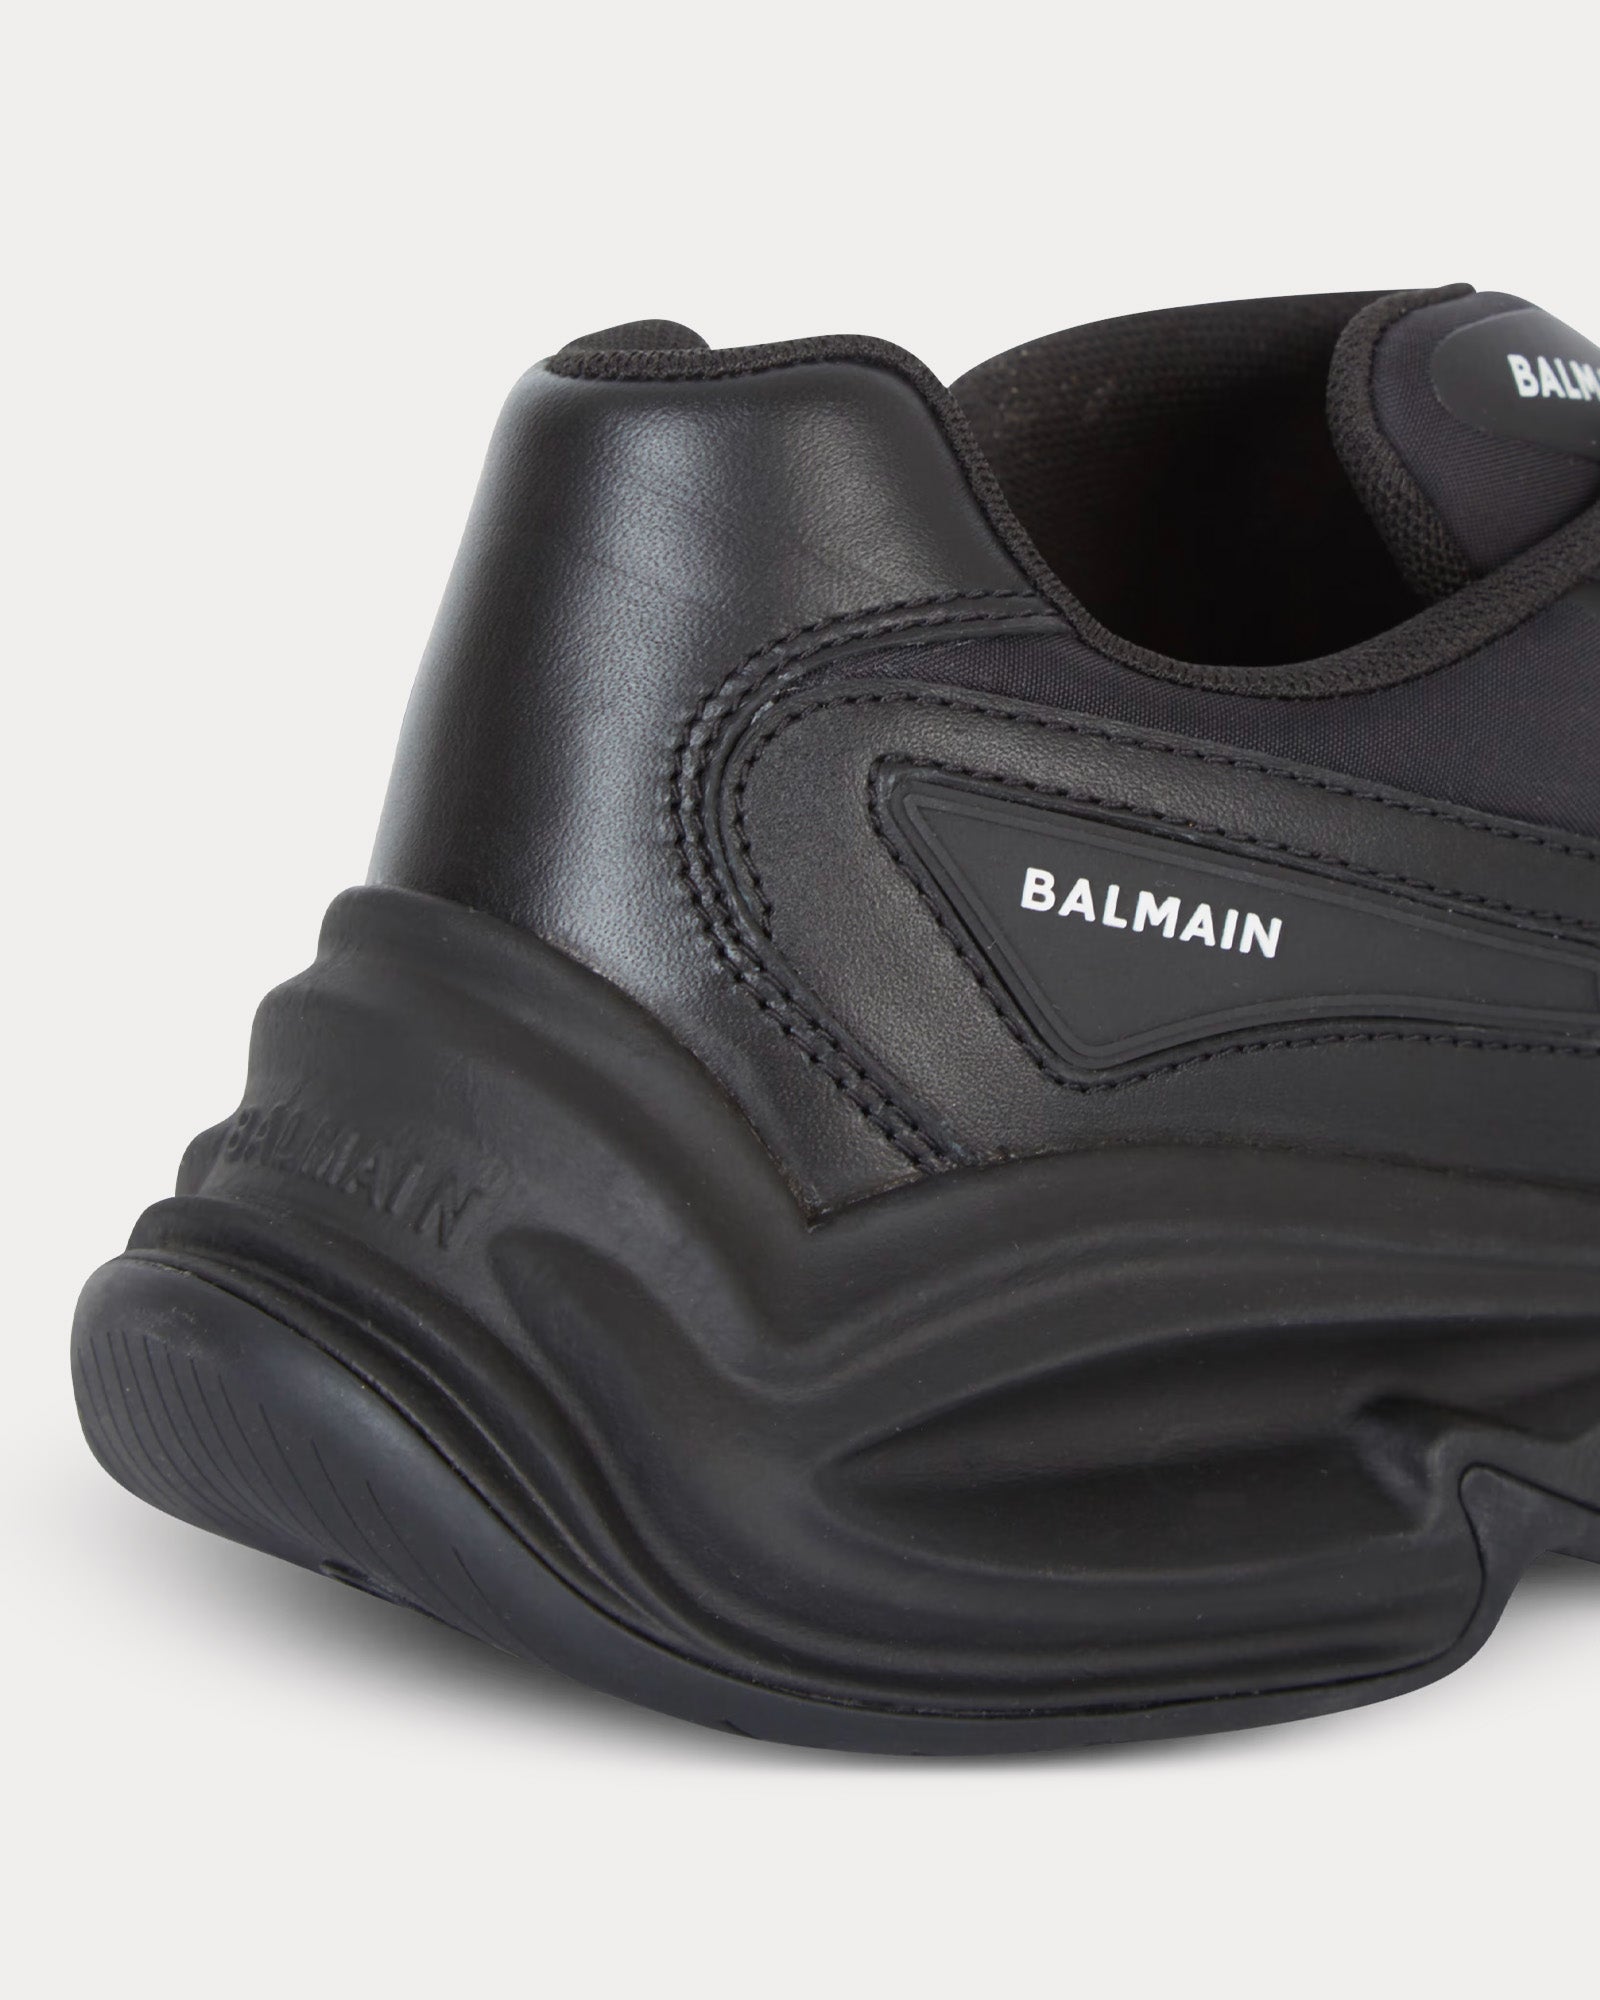 Balmain - Run-Row Leather Black Low Top Sneakers